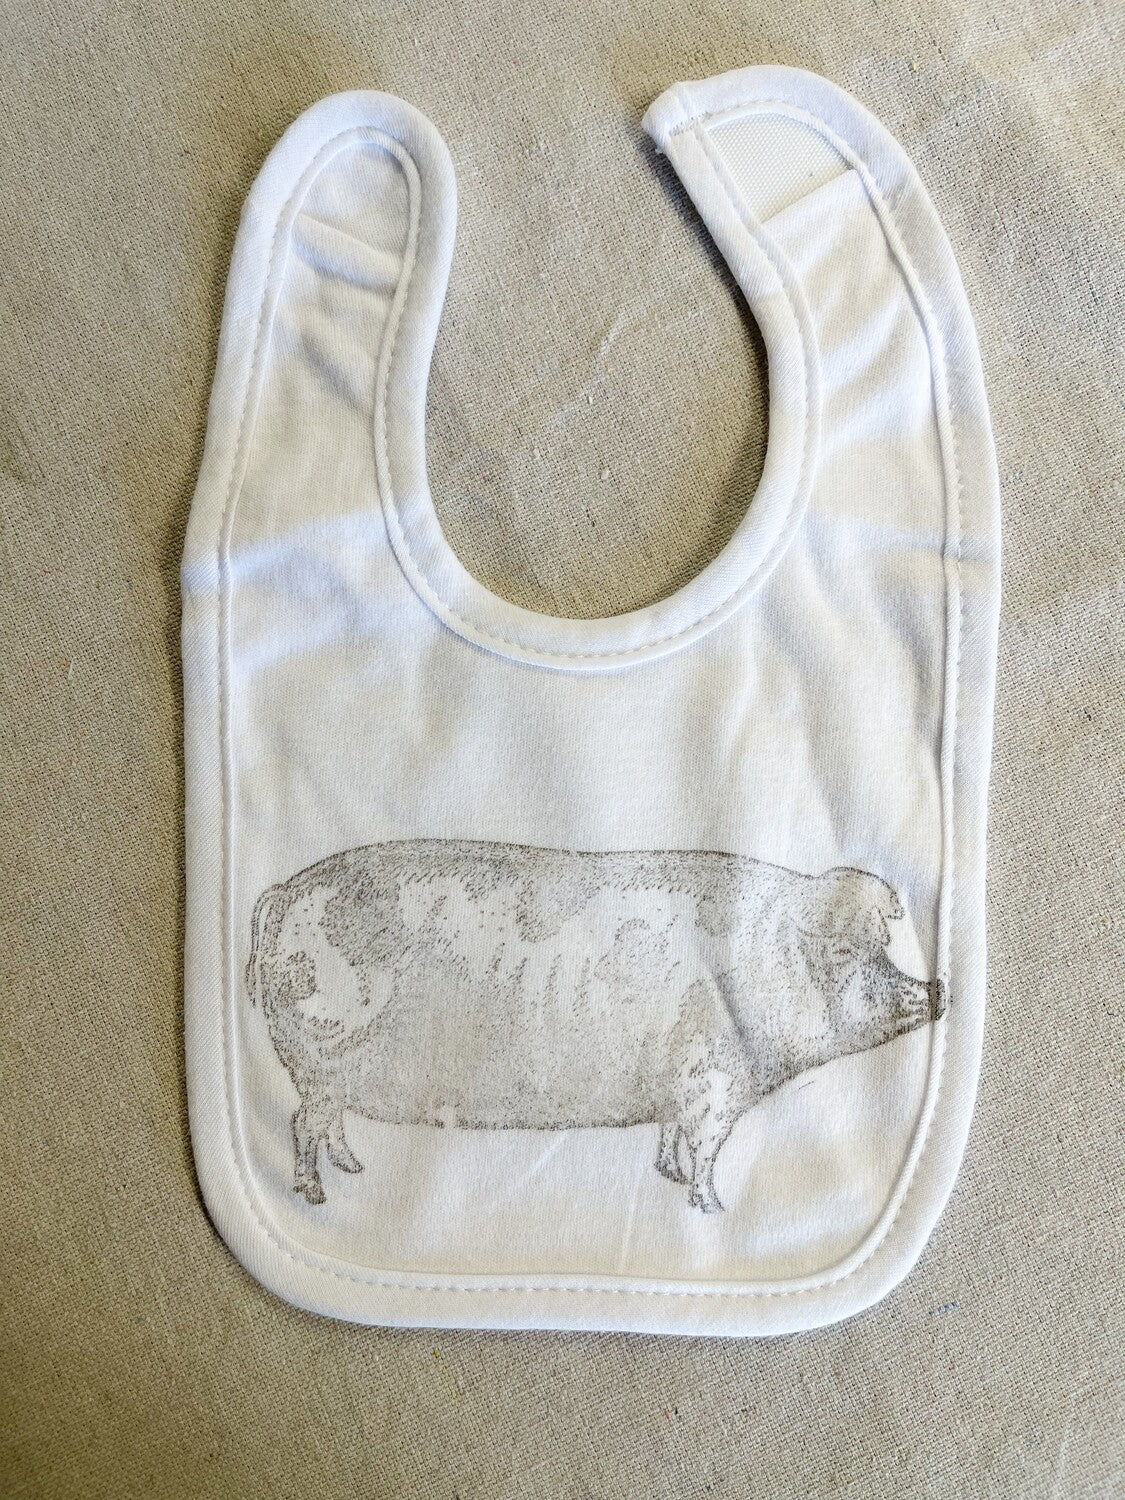 Pig Print White Baby Bib-Stockton Farm-Baby Bib-Stockton Farm